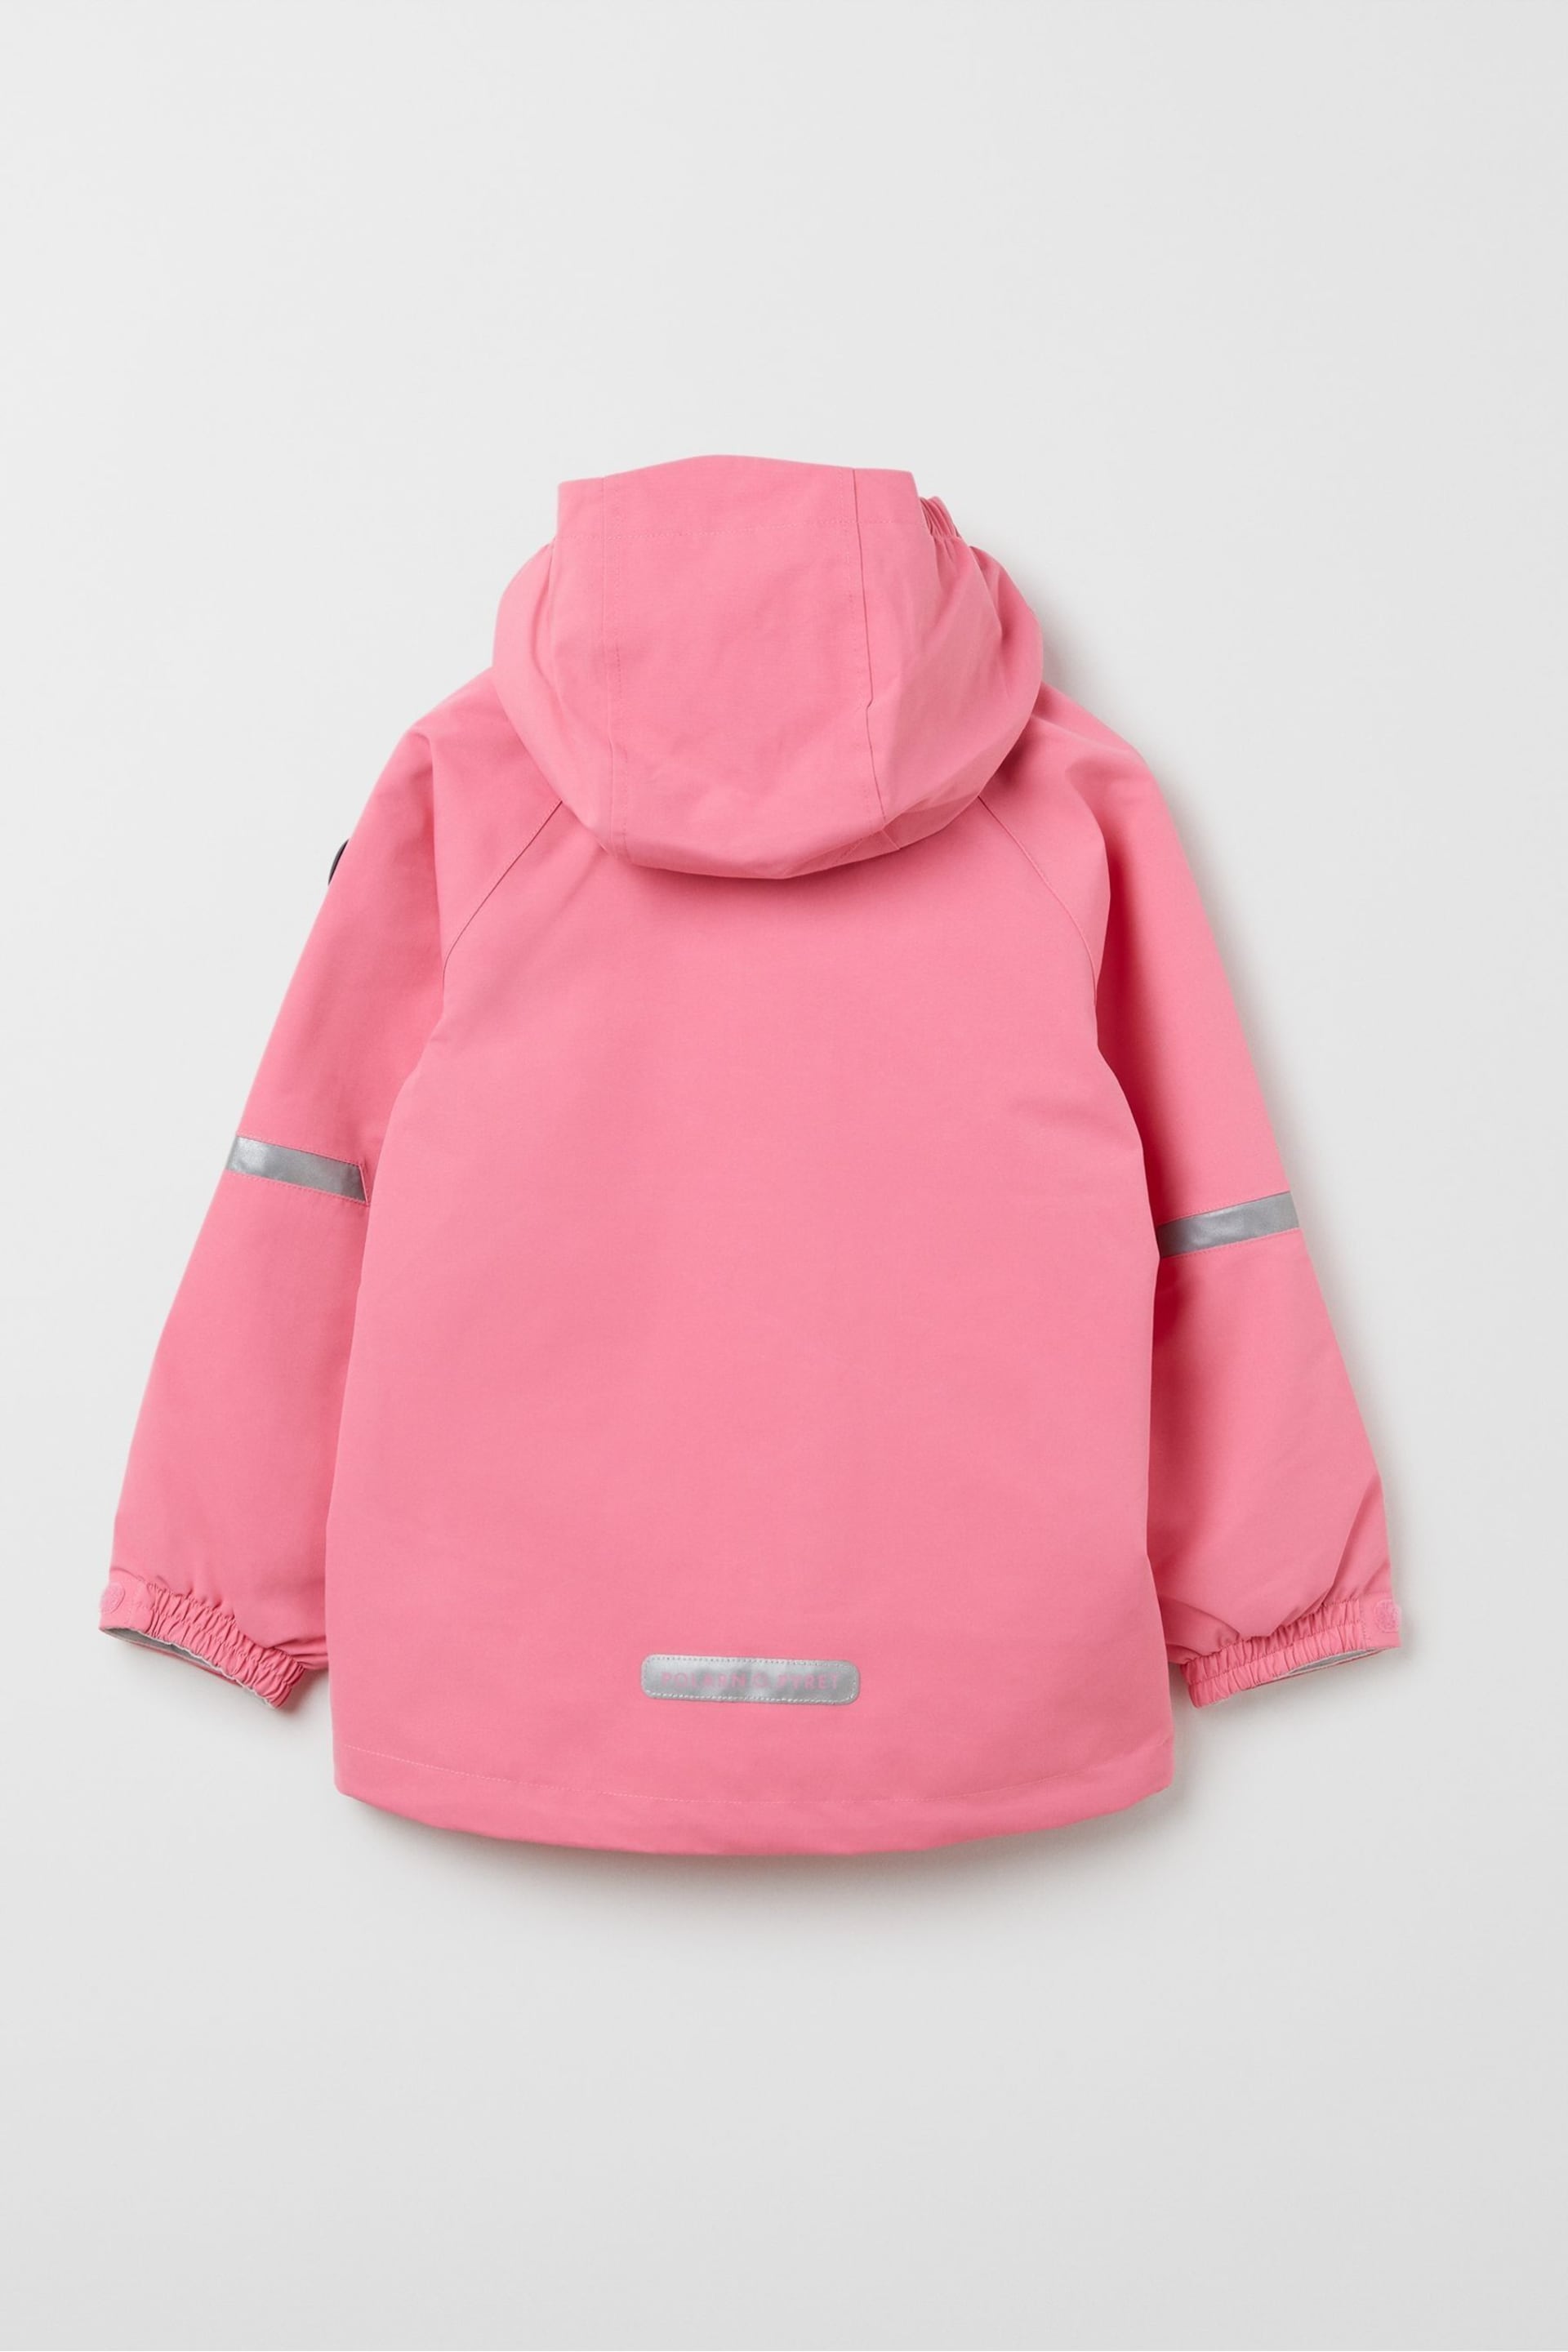 Polarn O. Pyret Pink Waterproof Shell Jacket - Image 3 of 6